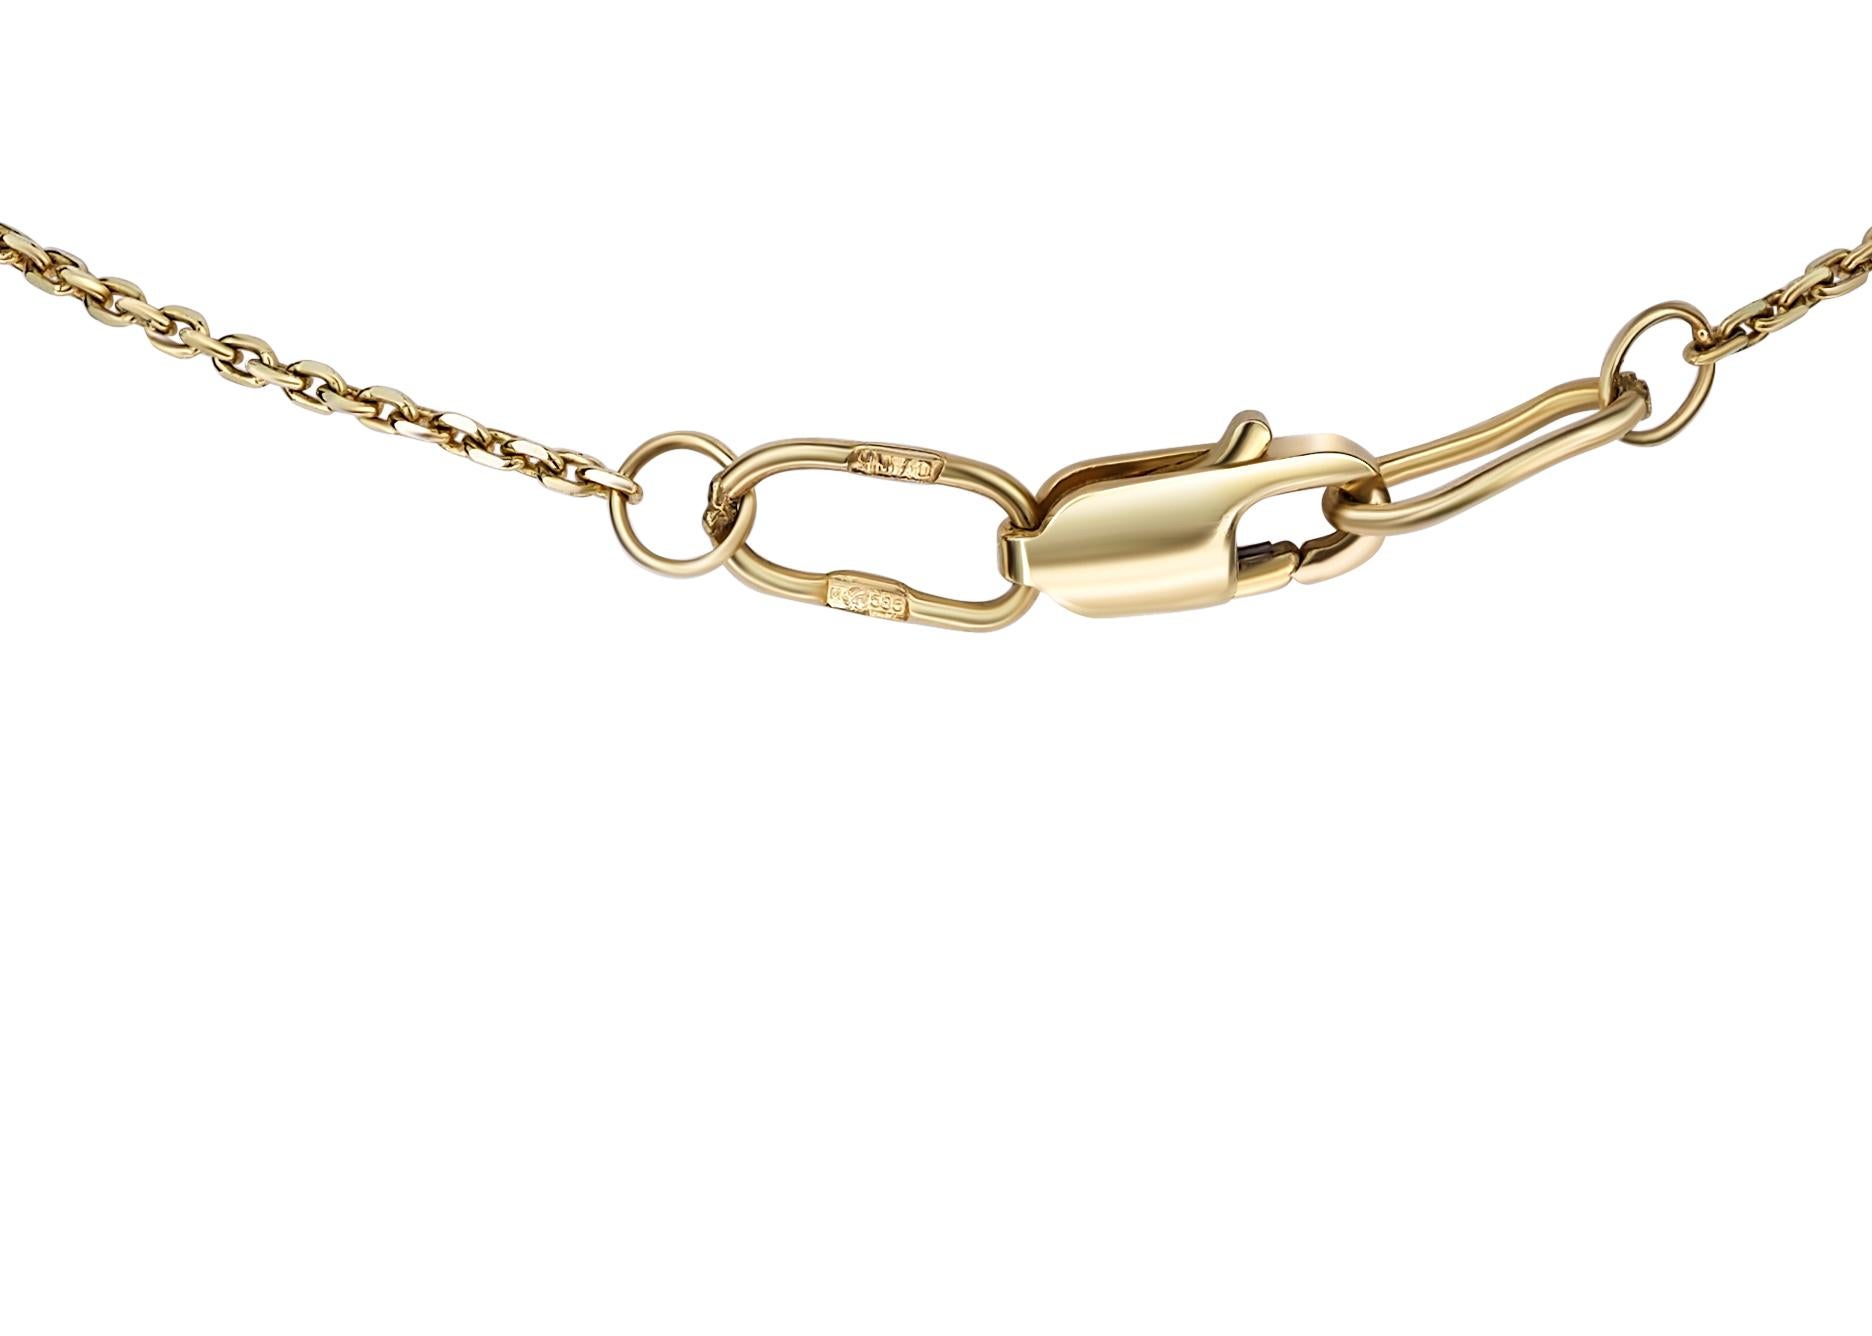 Sapphire Necklace Pendant in 14 Karat Gold, Certified Heart Sapphire Pendant For Sale 1